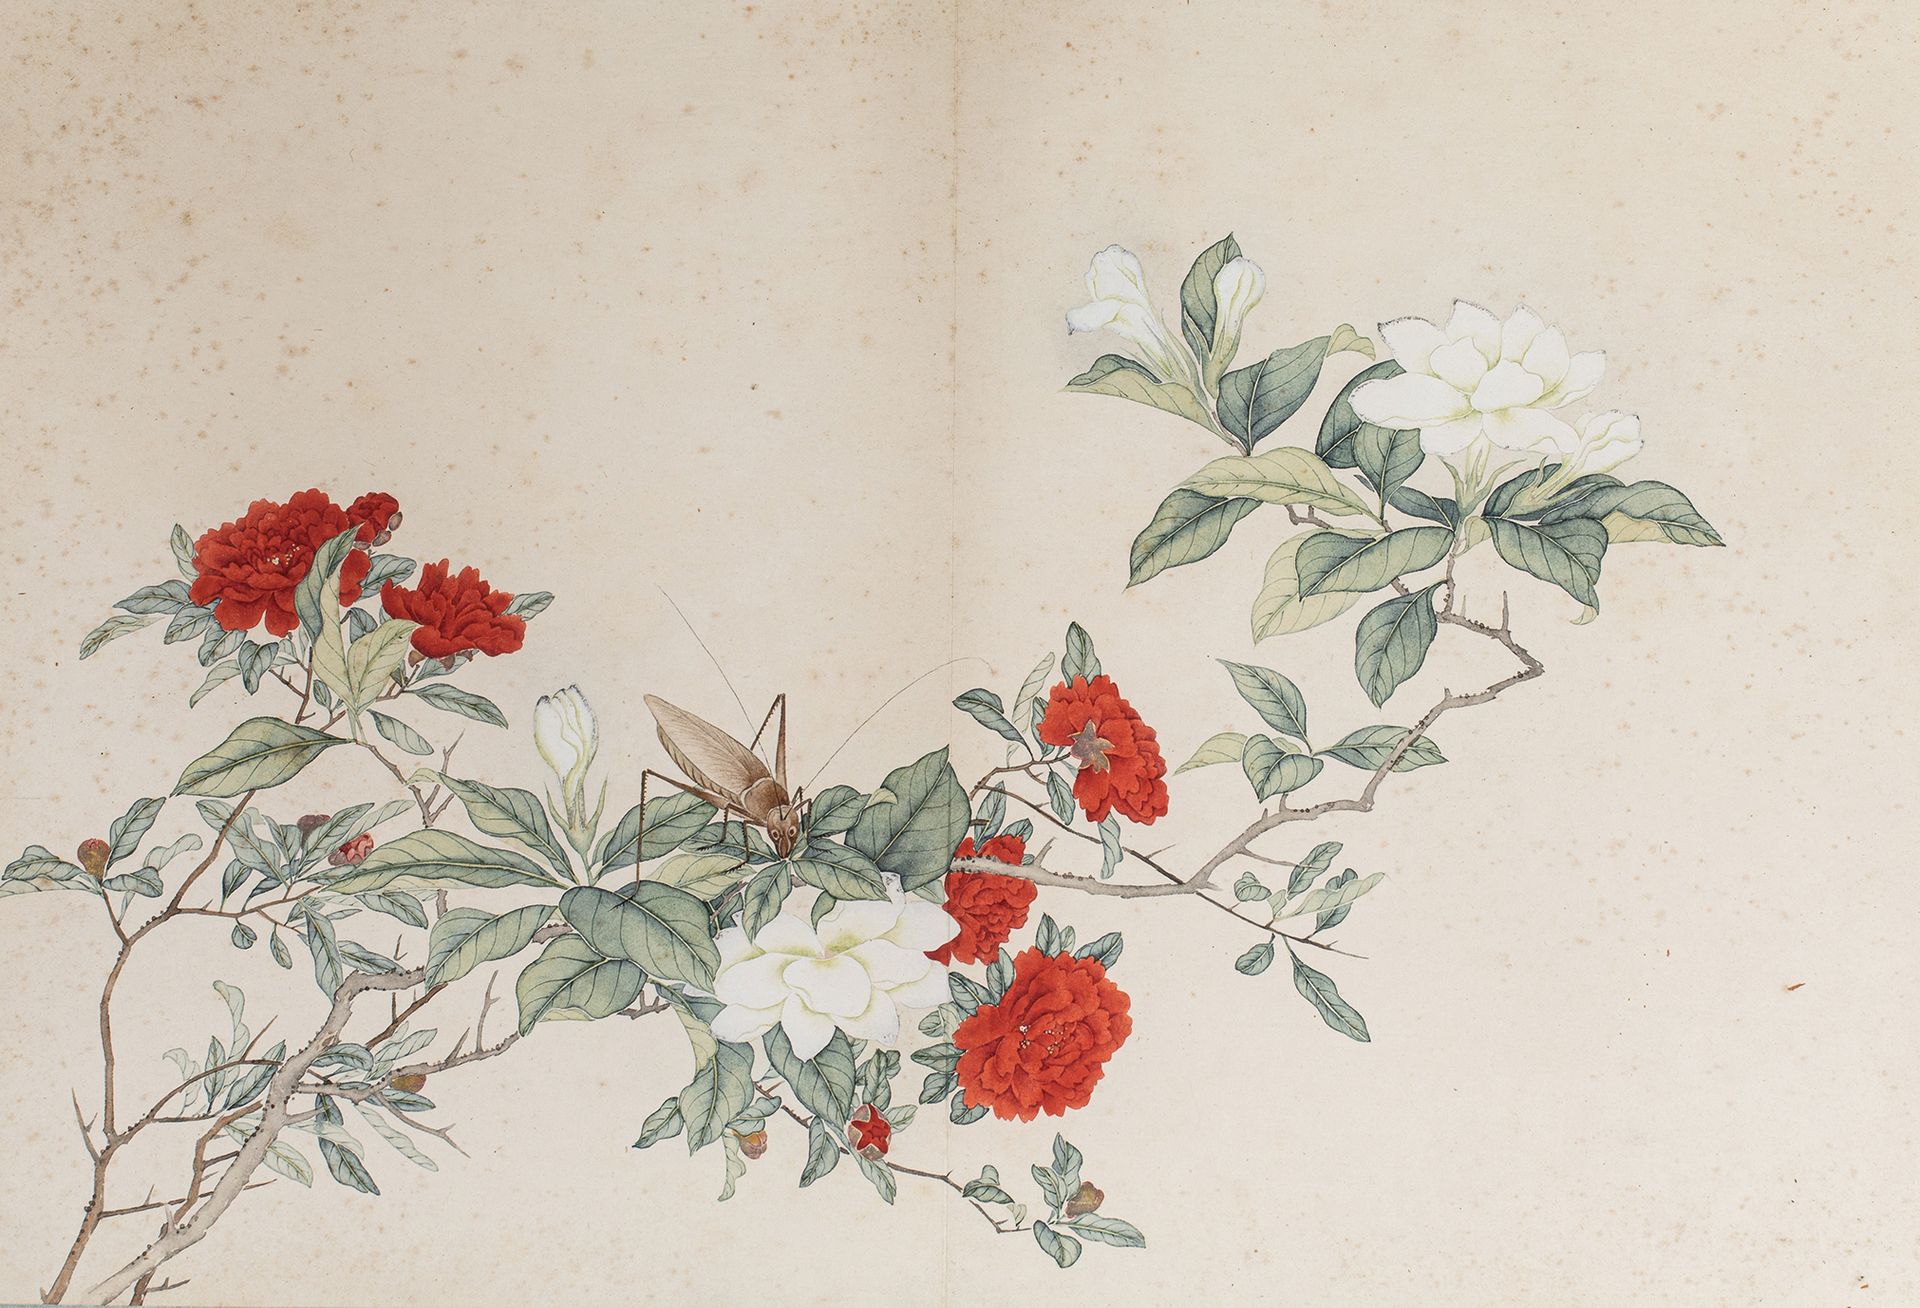 Null 
Pittura floreale su carta. Cina 18° secolo

H. 32 cm L.49 cm